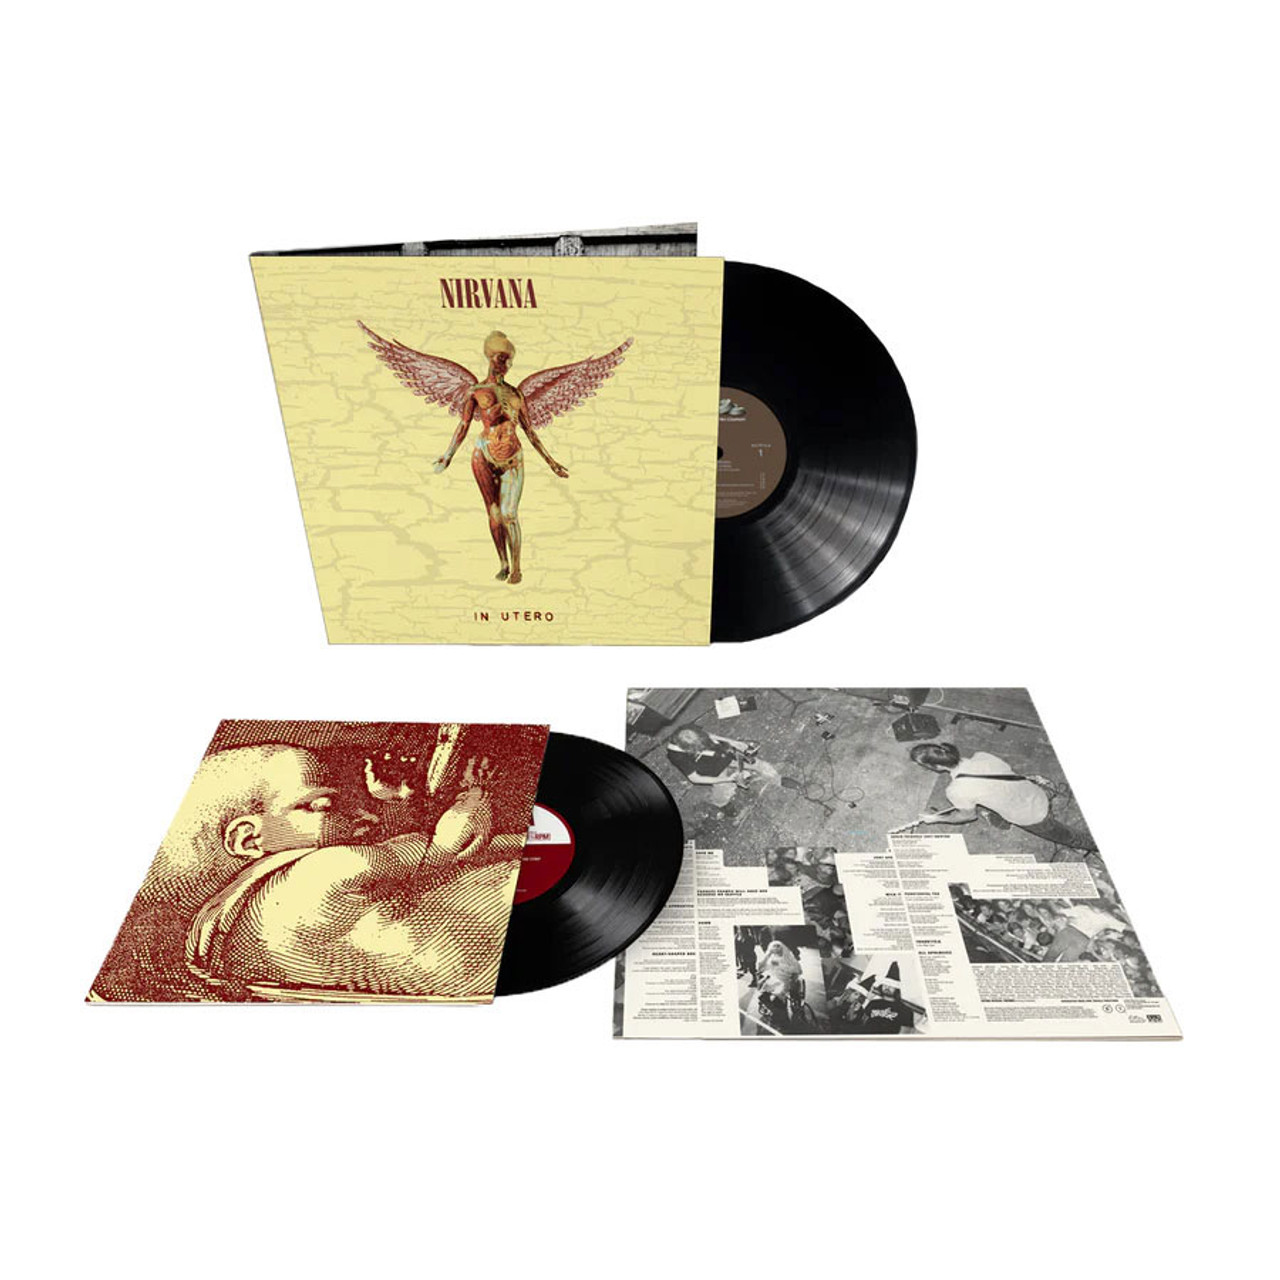 Nirvana - Nirvana: Deluxe Edition 45rpm Vinyl 2LP - uDiscover